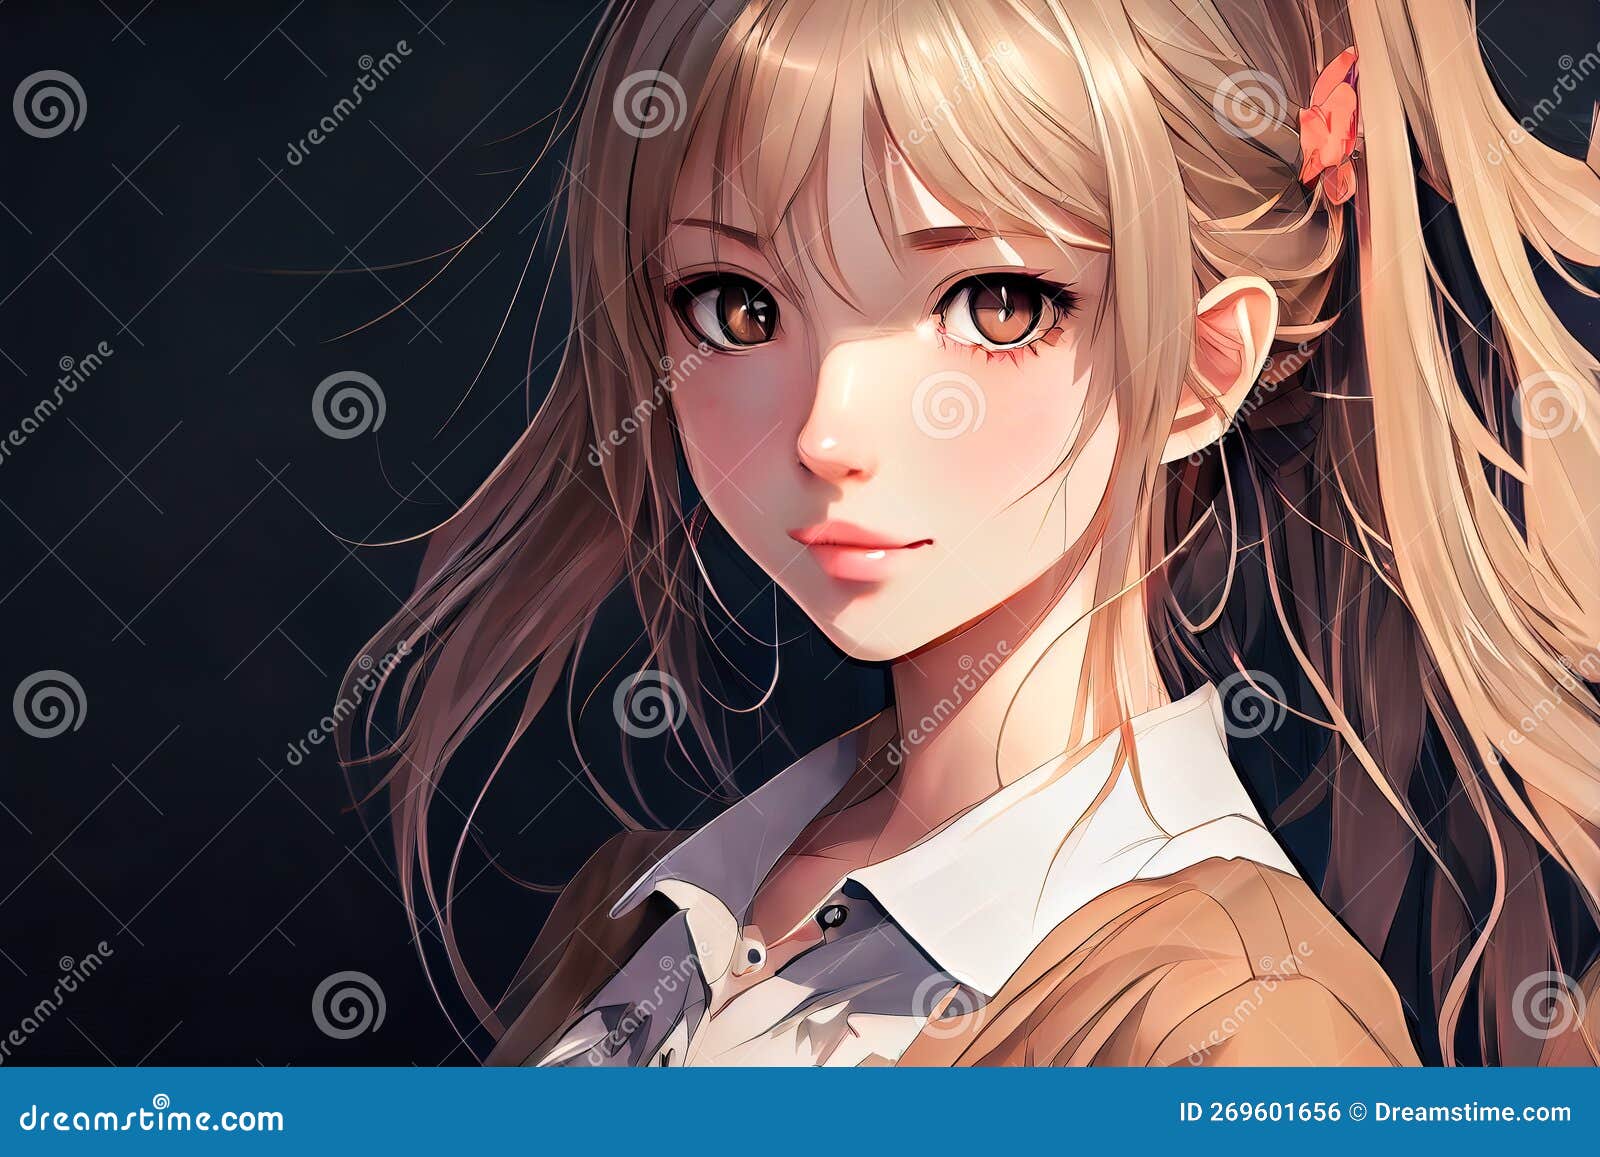 Beautiful Anime Girl 4K by Subaru_sama-demhanvico.com.vn